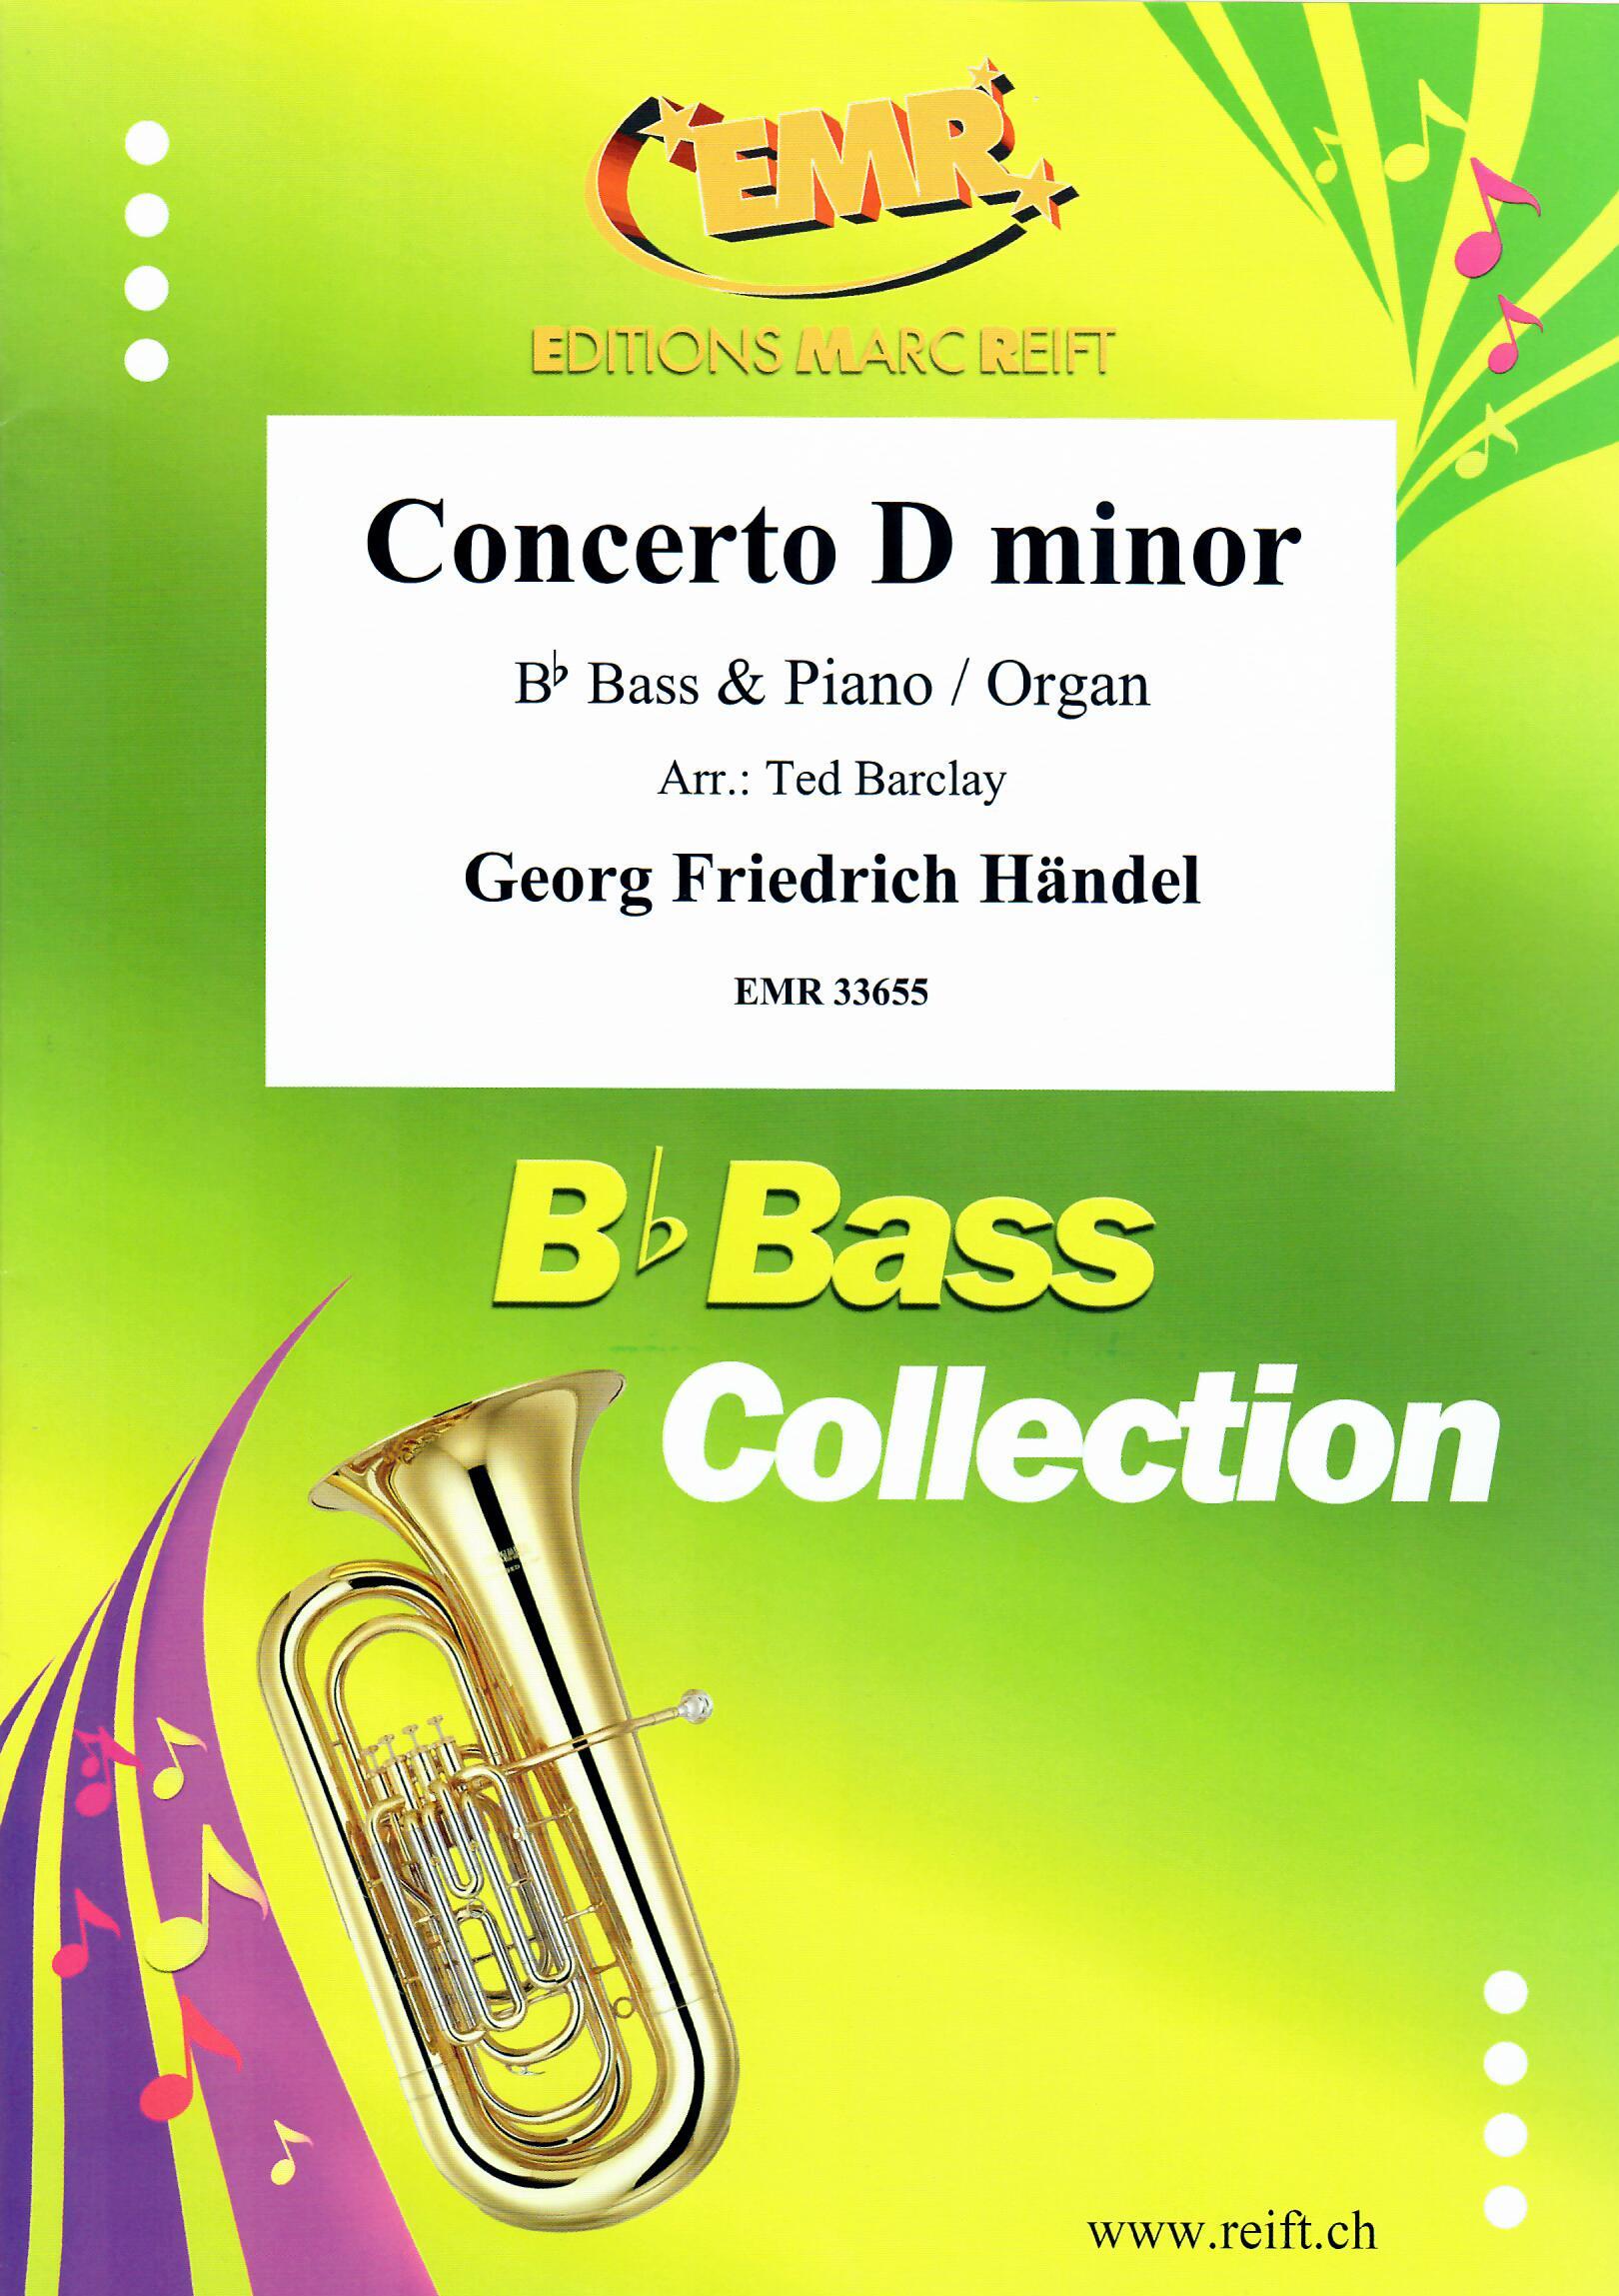 CONCERTO D MINOR, SOLOS - E♭. Bass